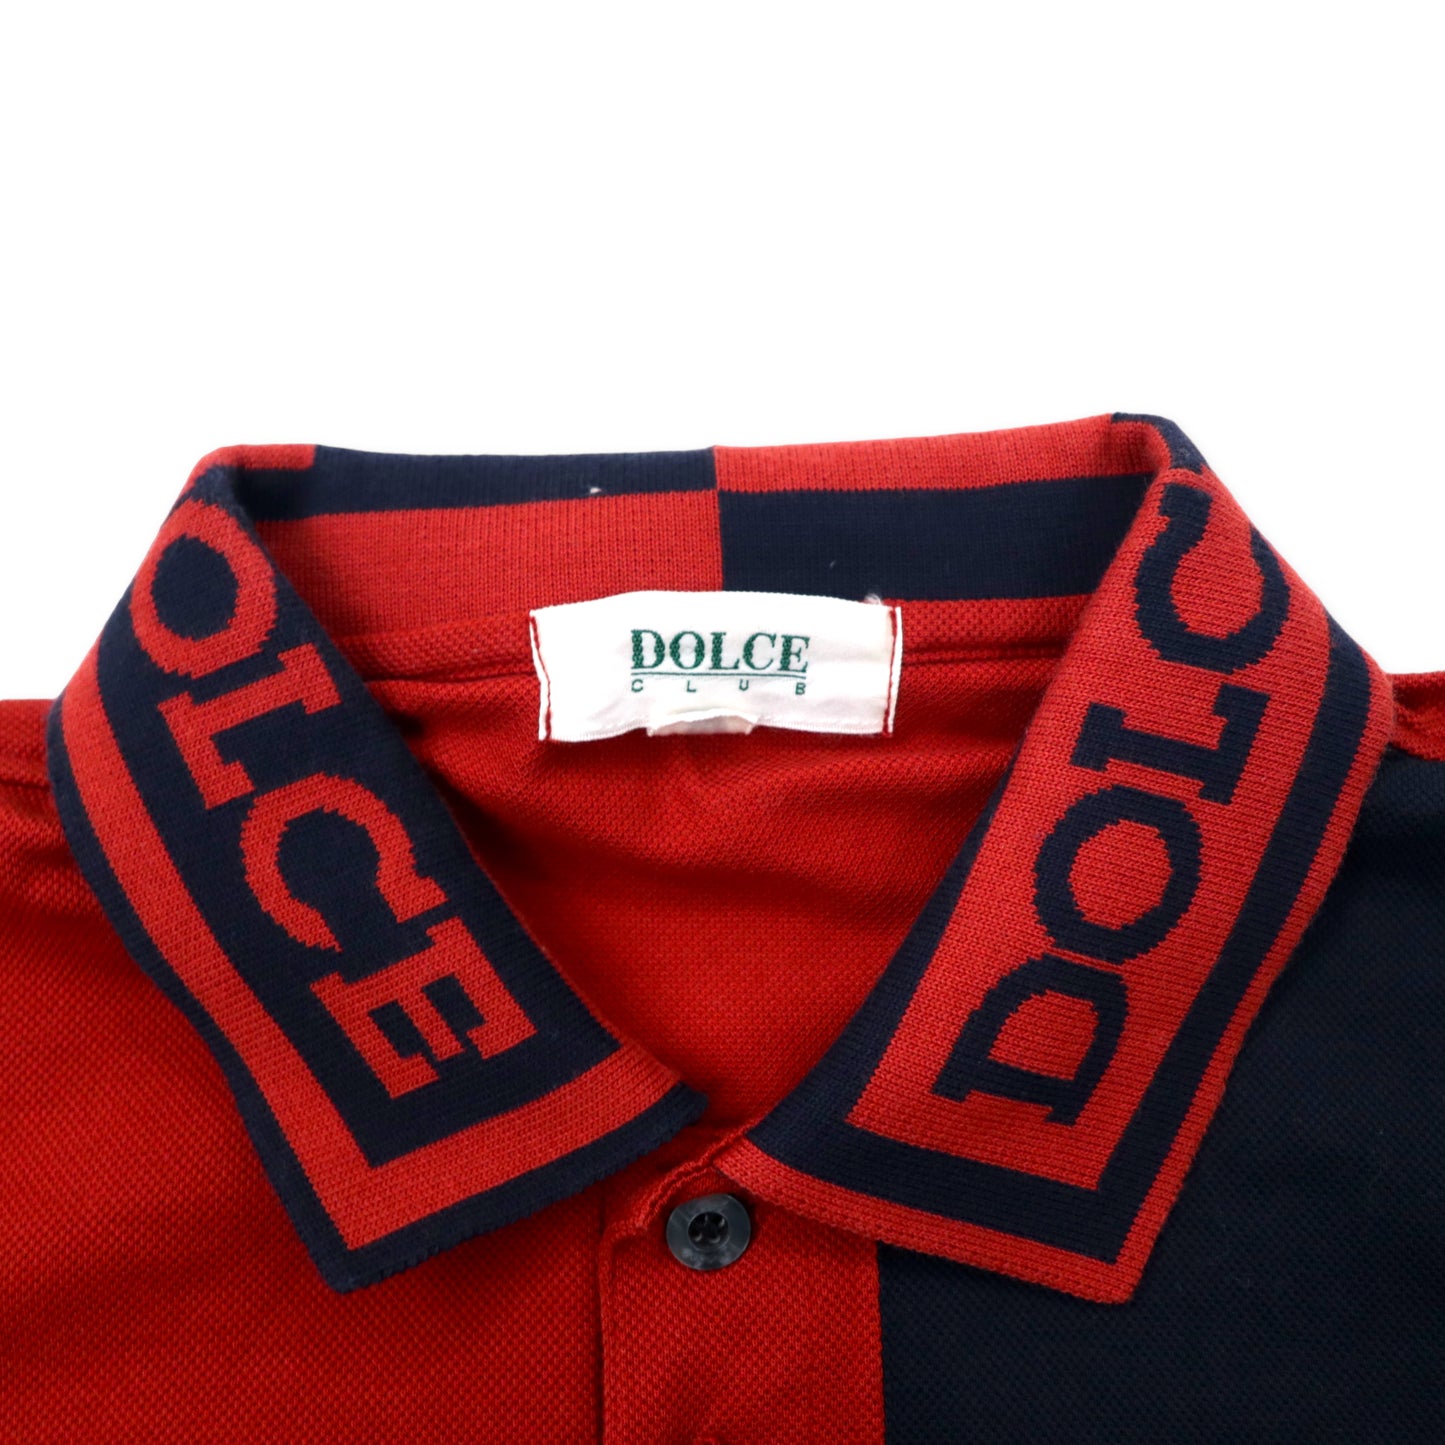 DOLCE CLUB 90年代 ポロシャツ 50 レッド ネイビー コットン 犬 キャラクター 日本製